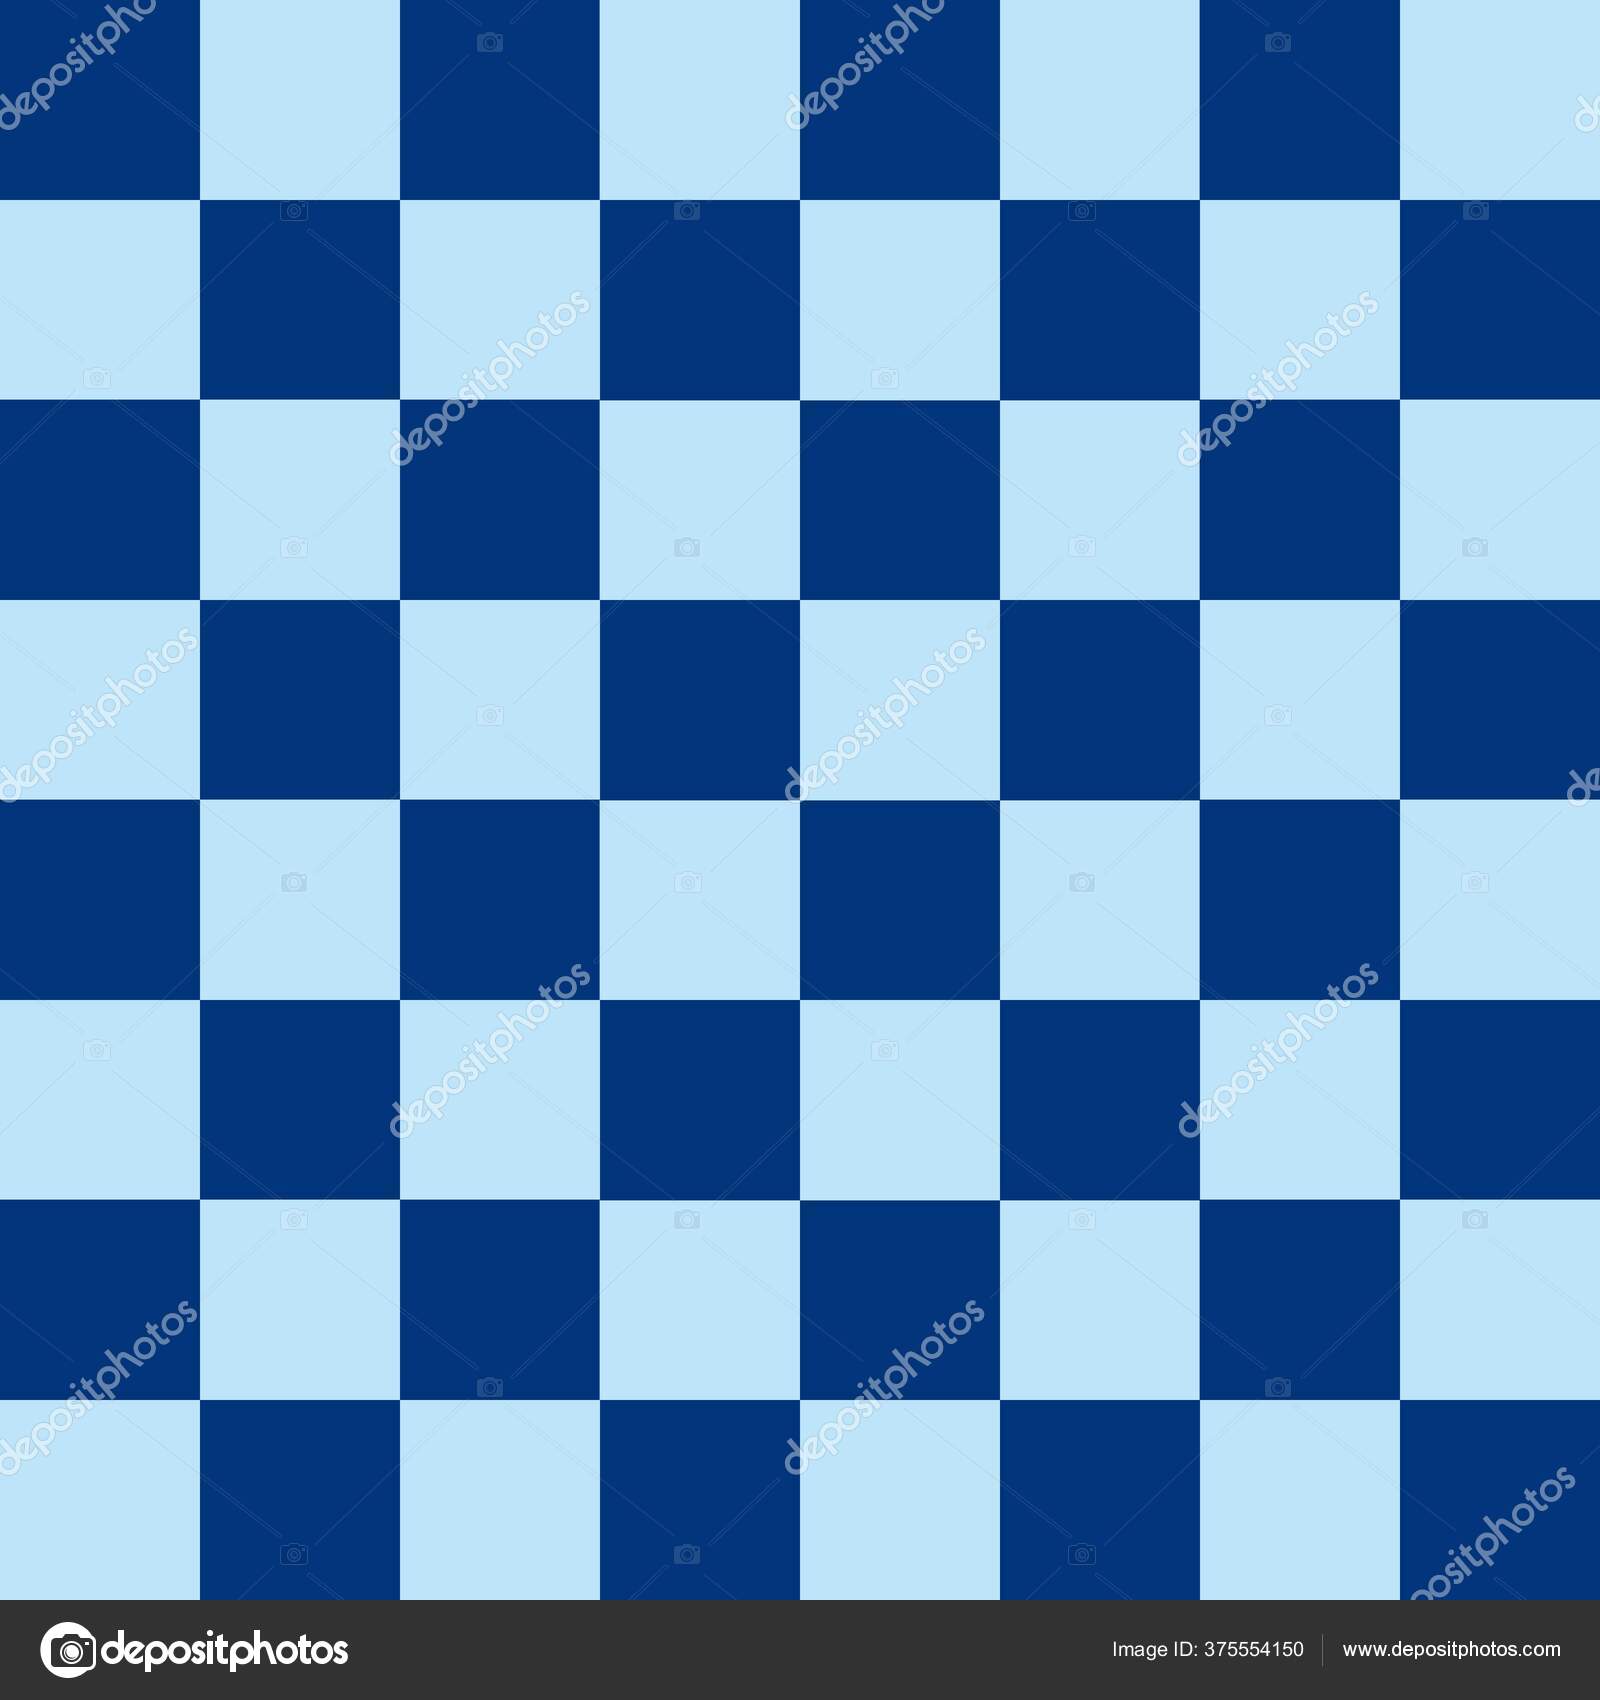 Modern Chess Board Background Design Navy Blue Sky Blue Colored Stock Photo  by ©jayantbahel 375554150